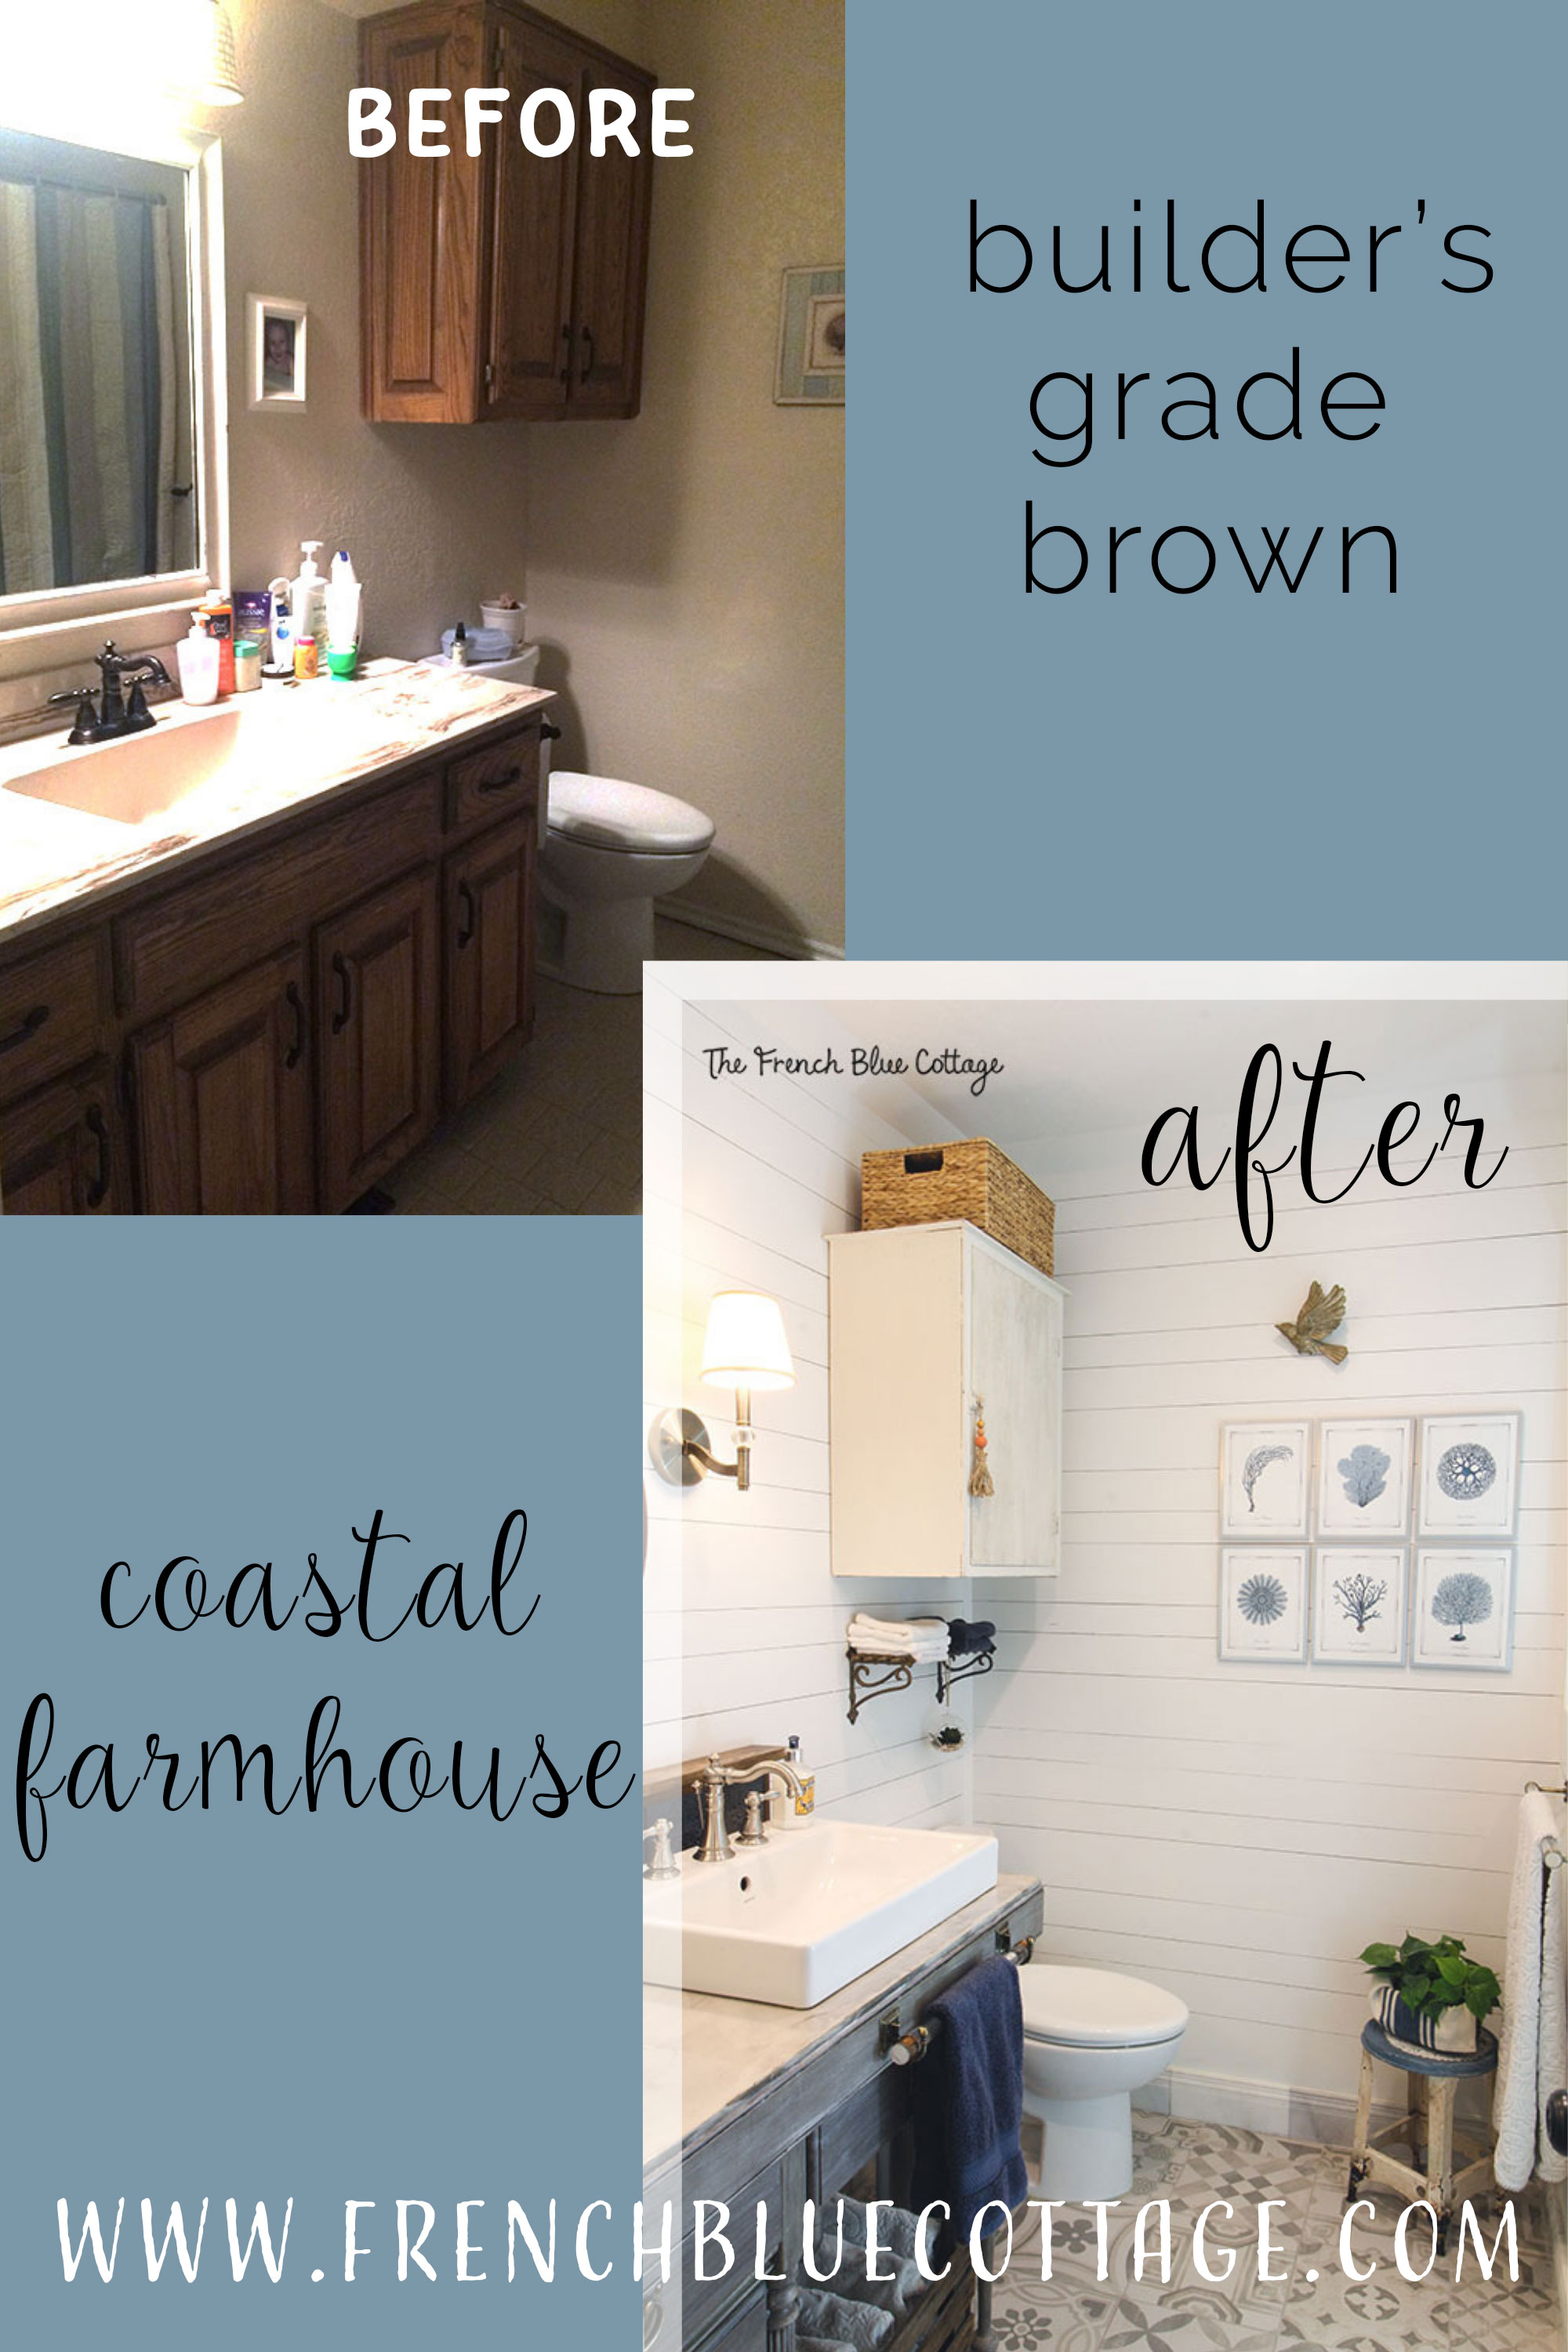 coastal farmhouse bathroom before and after